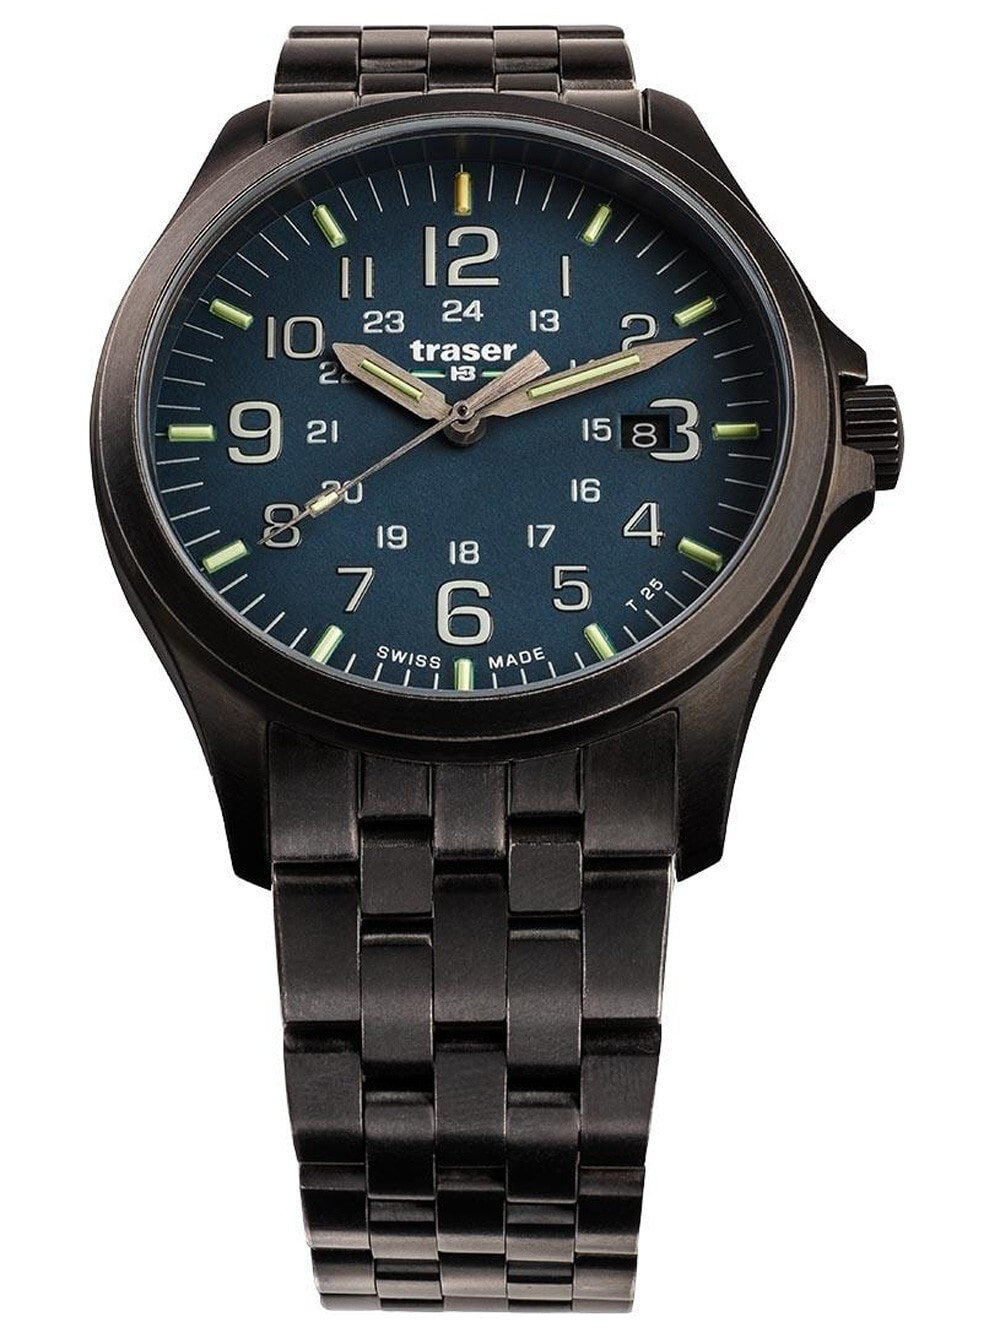 Мужские наручные часы с черным браслетом Traser H3 108739 P67 Officer GunMetal Blue Mens 42mm 10ATM